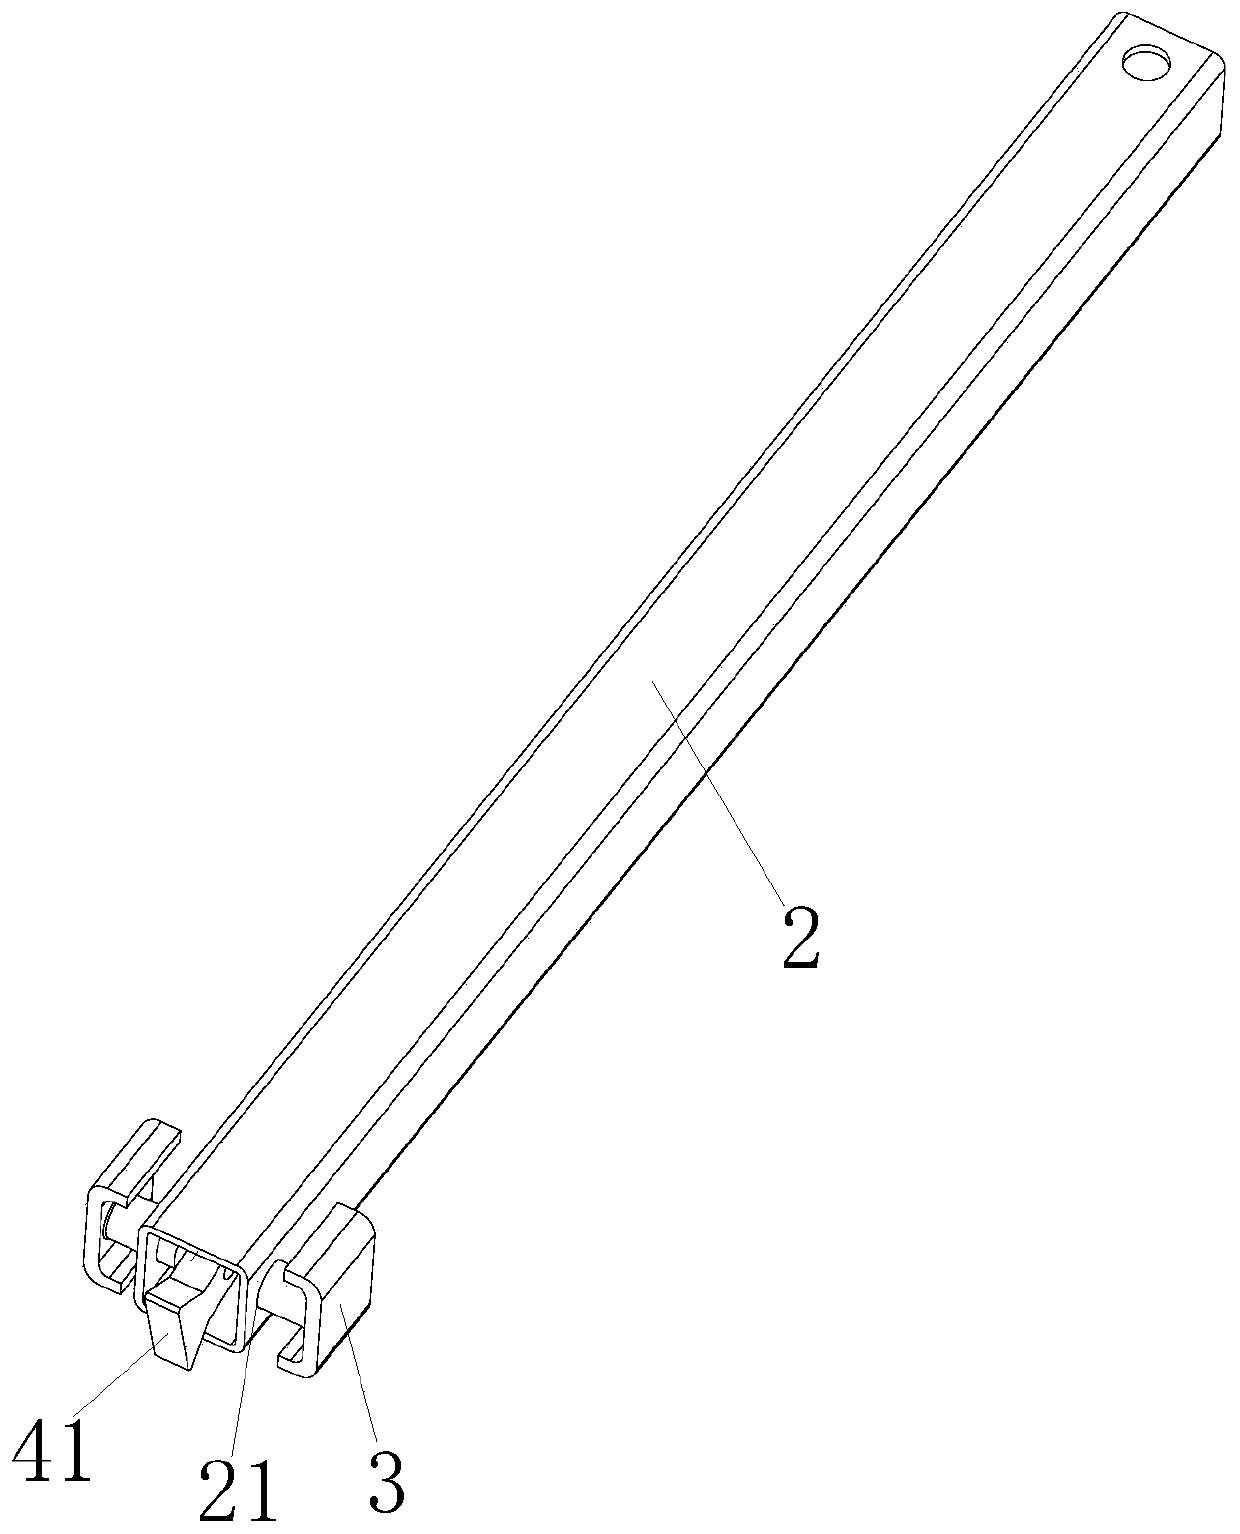 Self-locking drawbar and draw-bar box